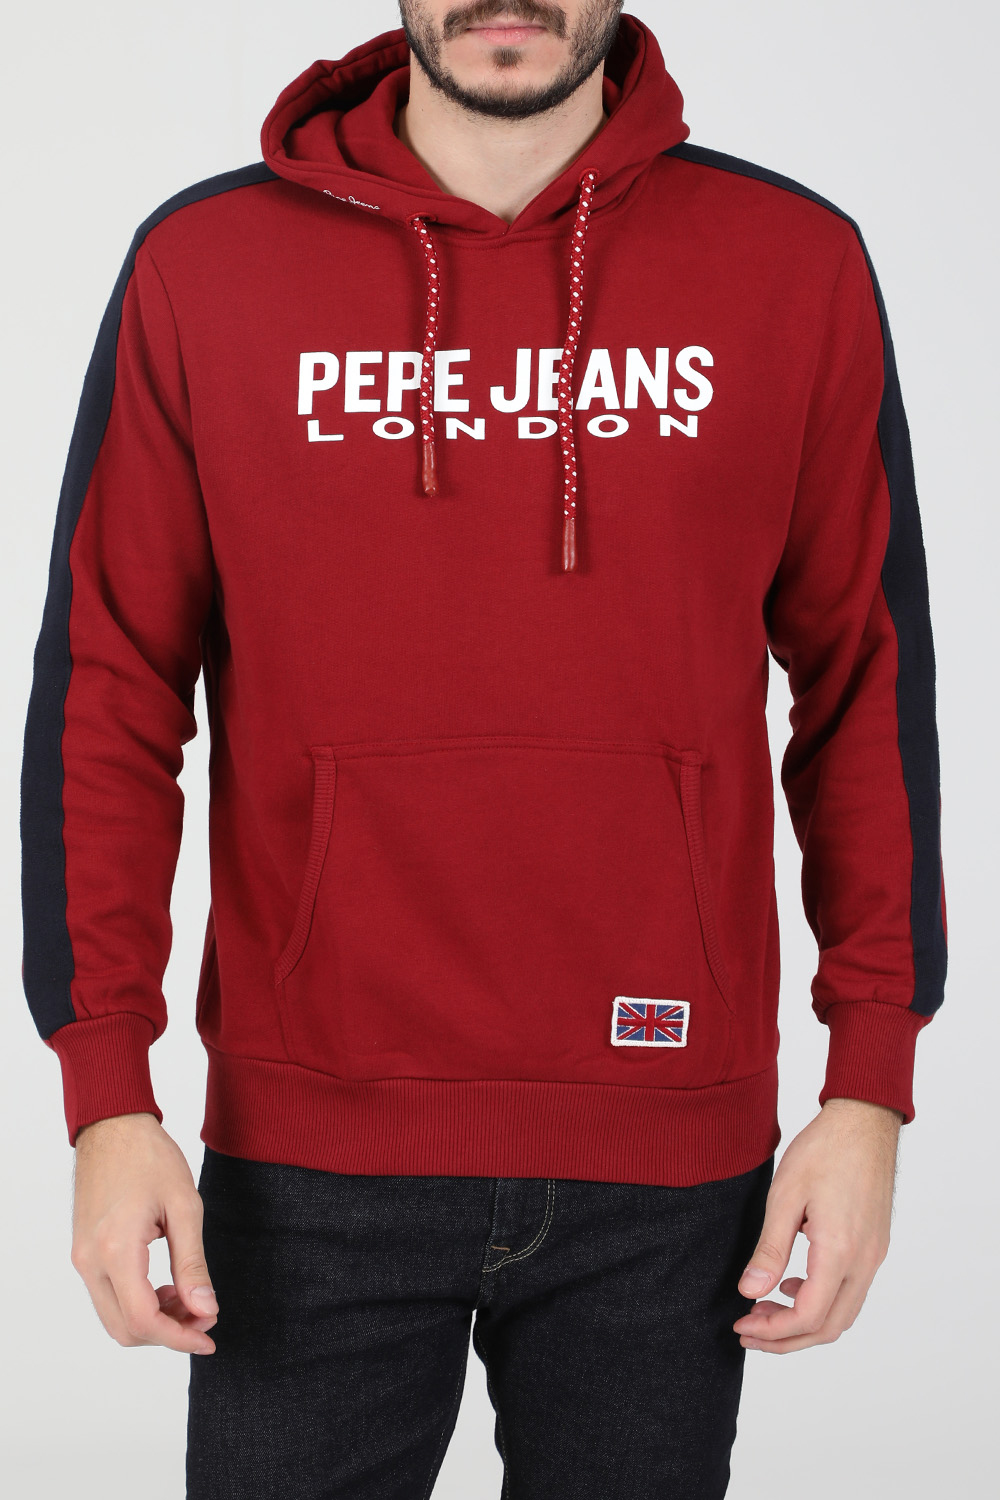 PEPE JEANS – Ανδρική φούτερ μπλούζα PEPE JEANS ANDRE κόκκινη 1822932.0-0046